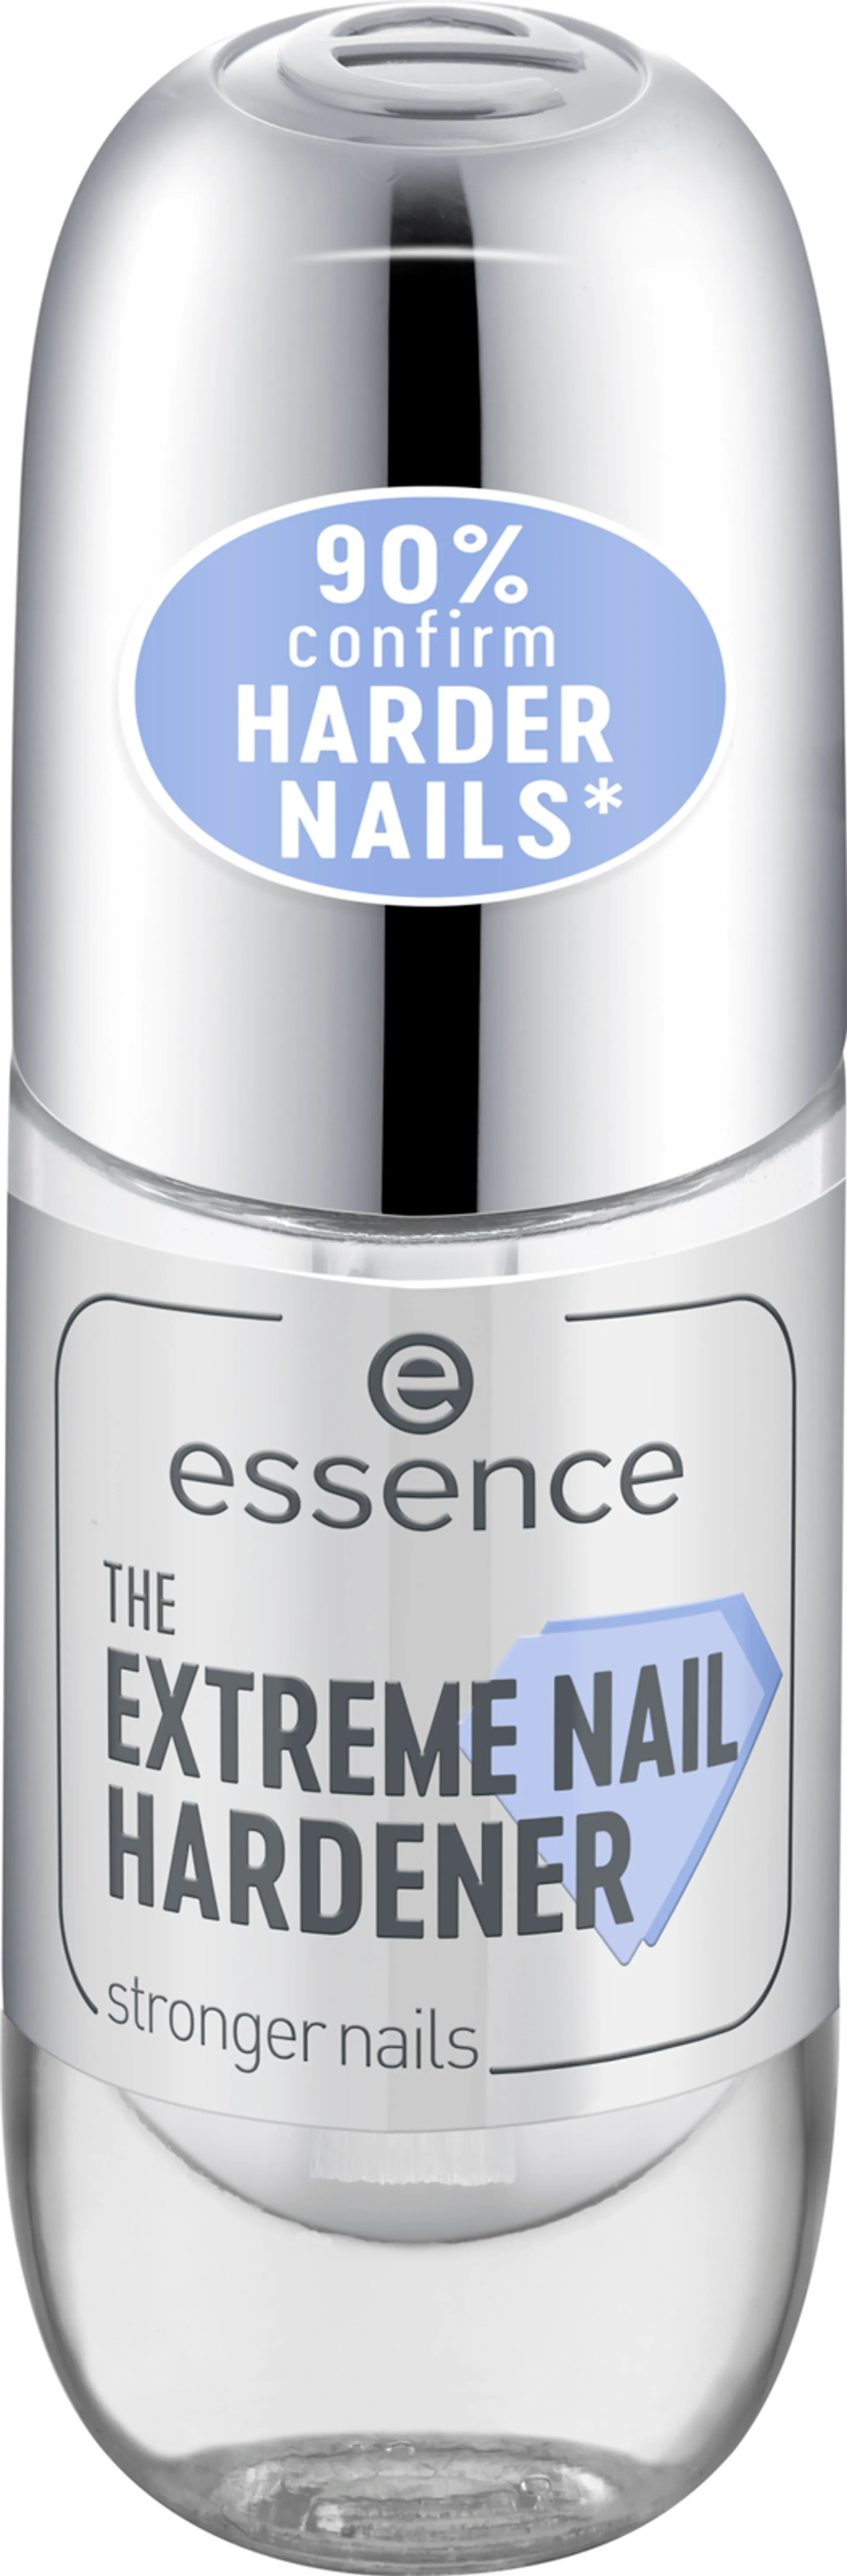 essence THE EXTREME NAIL HARDENER kynnenkovettaja 8 ml - 1